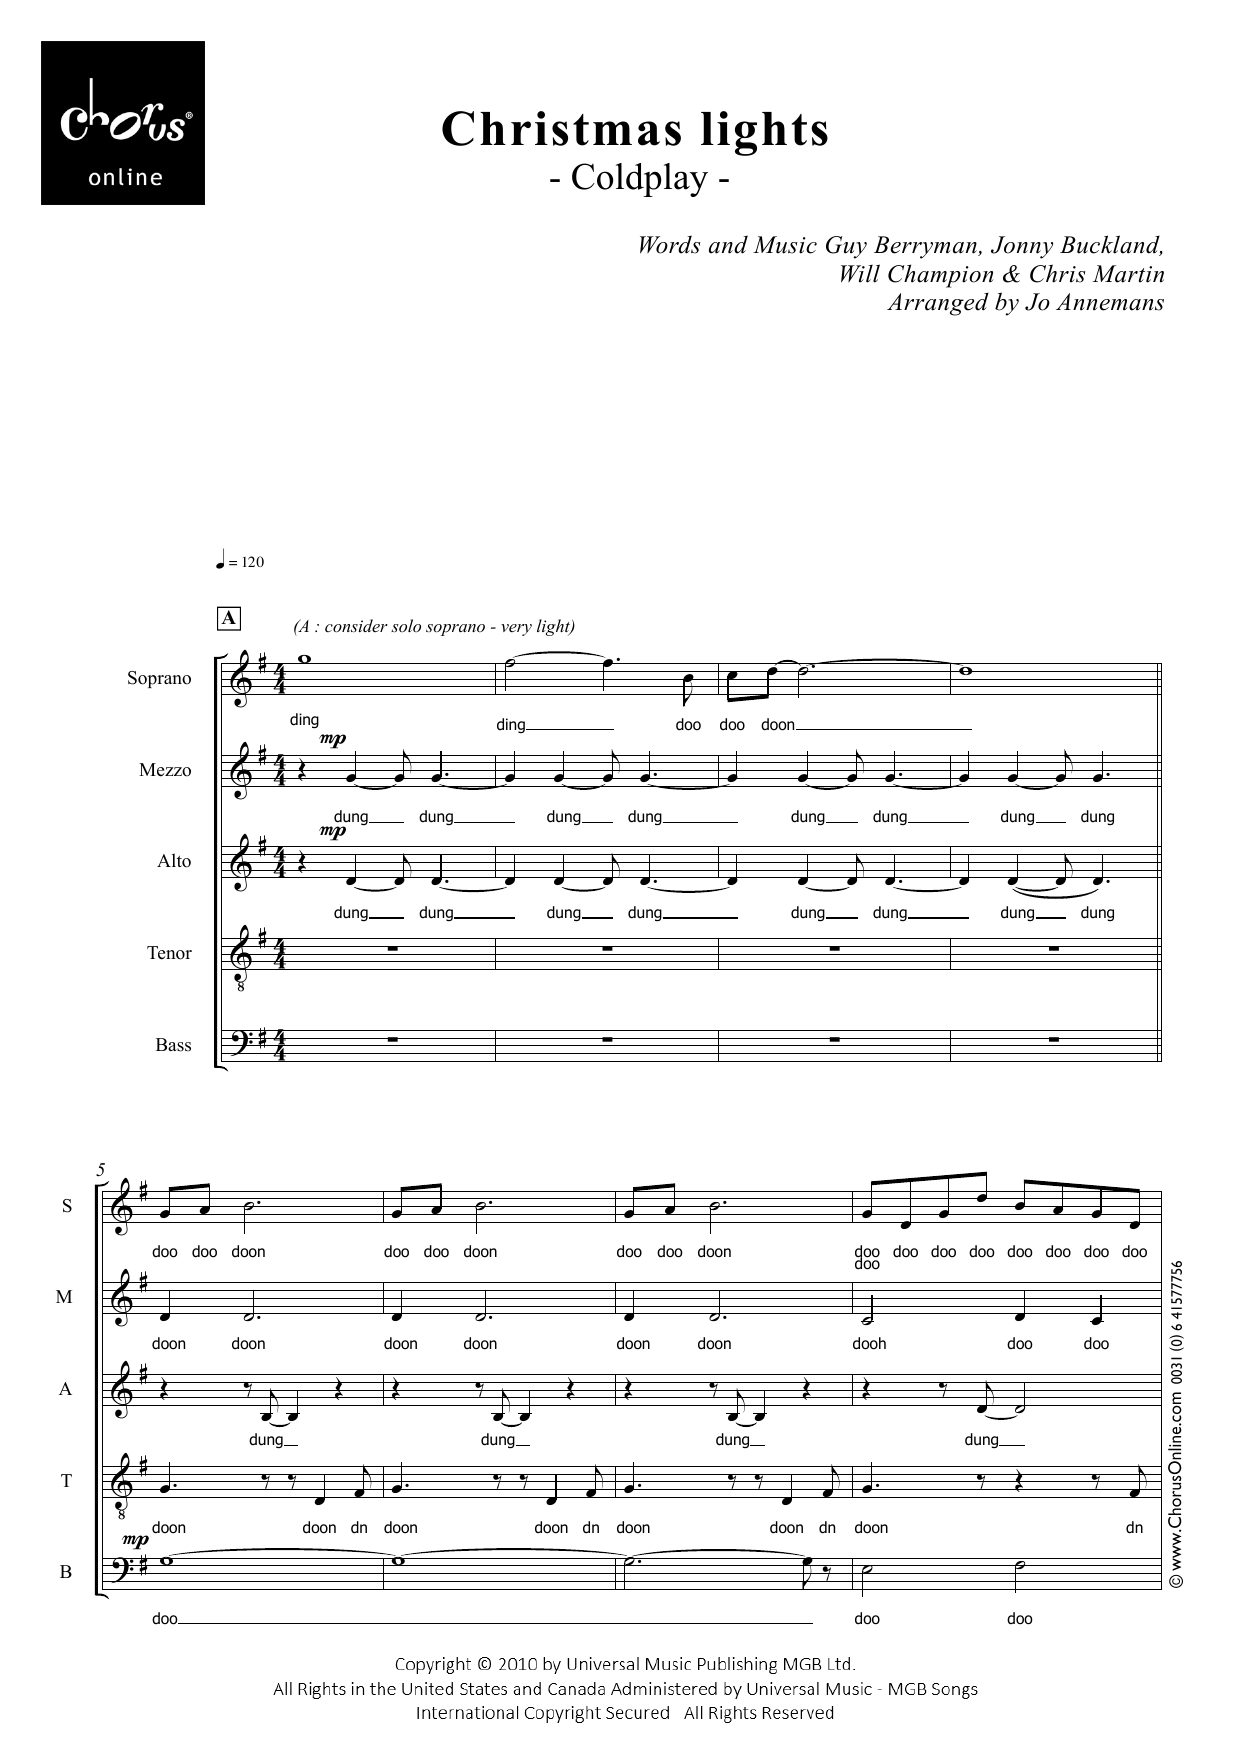 Coldplay Christmas Lights (arr. Jo Annemans) sheet music notes printable PDF score